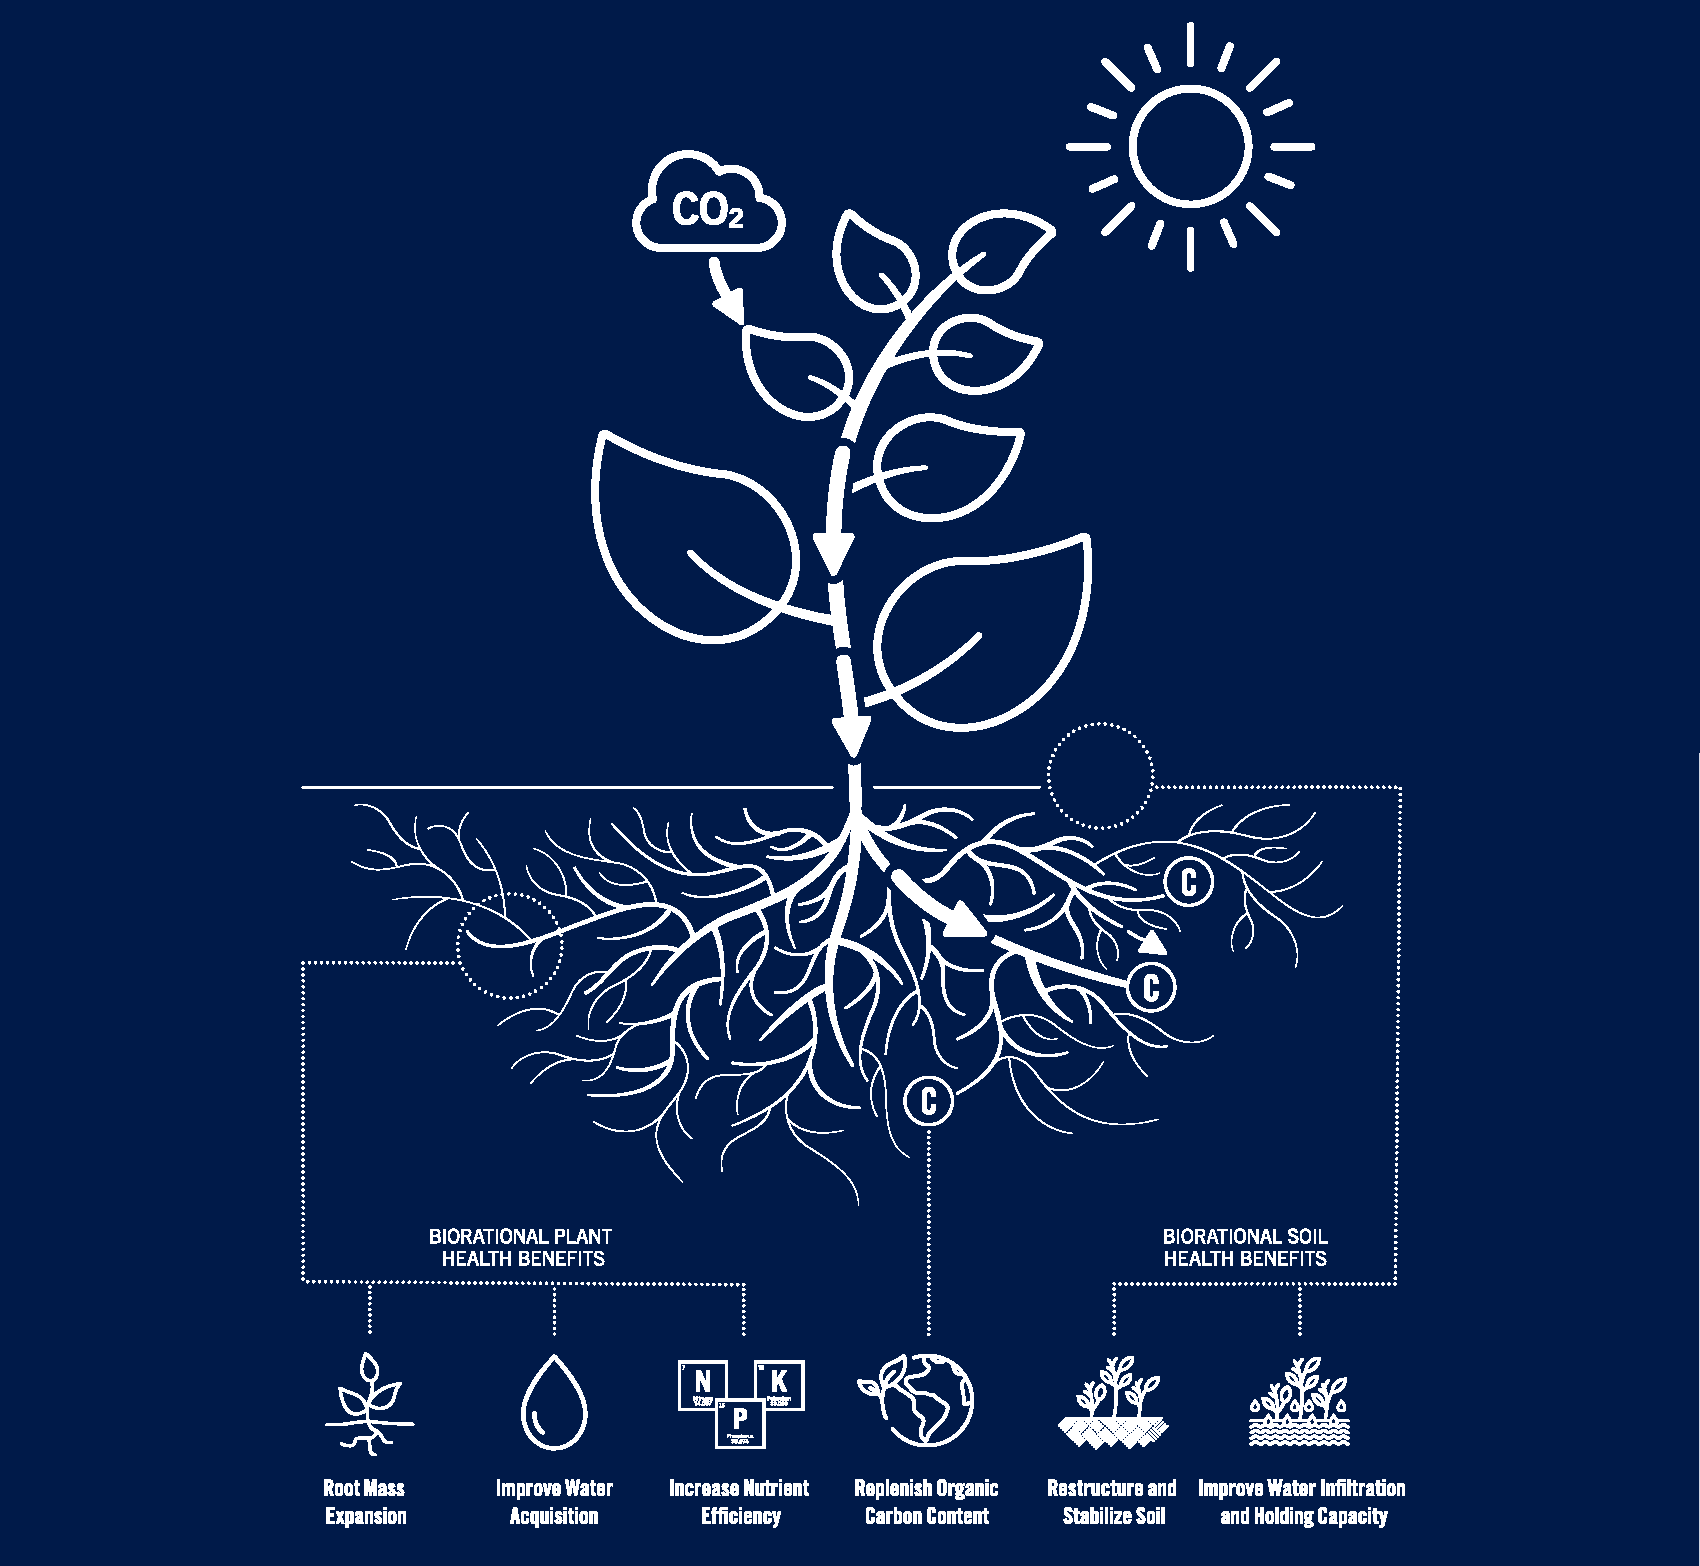 Valent BioSciences Sustainability Report